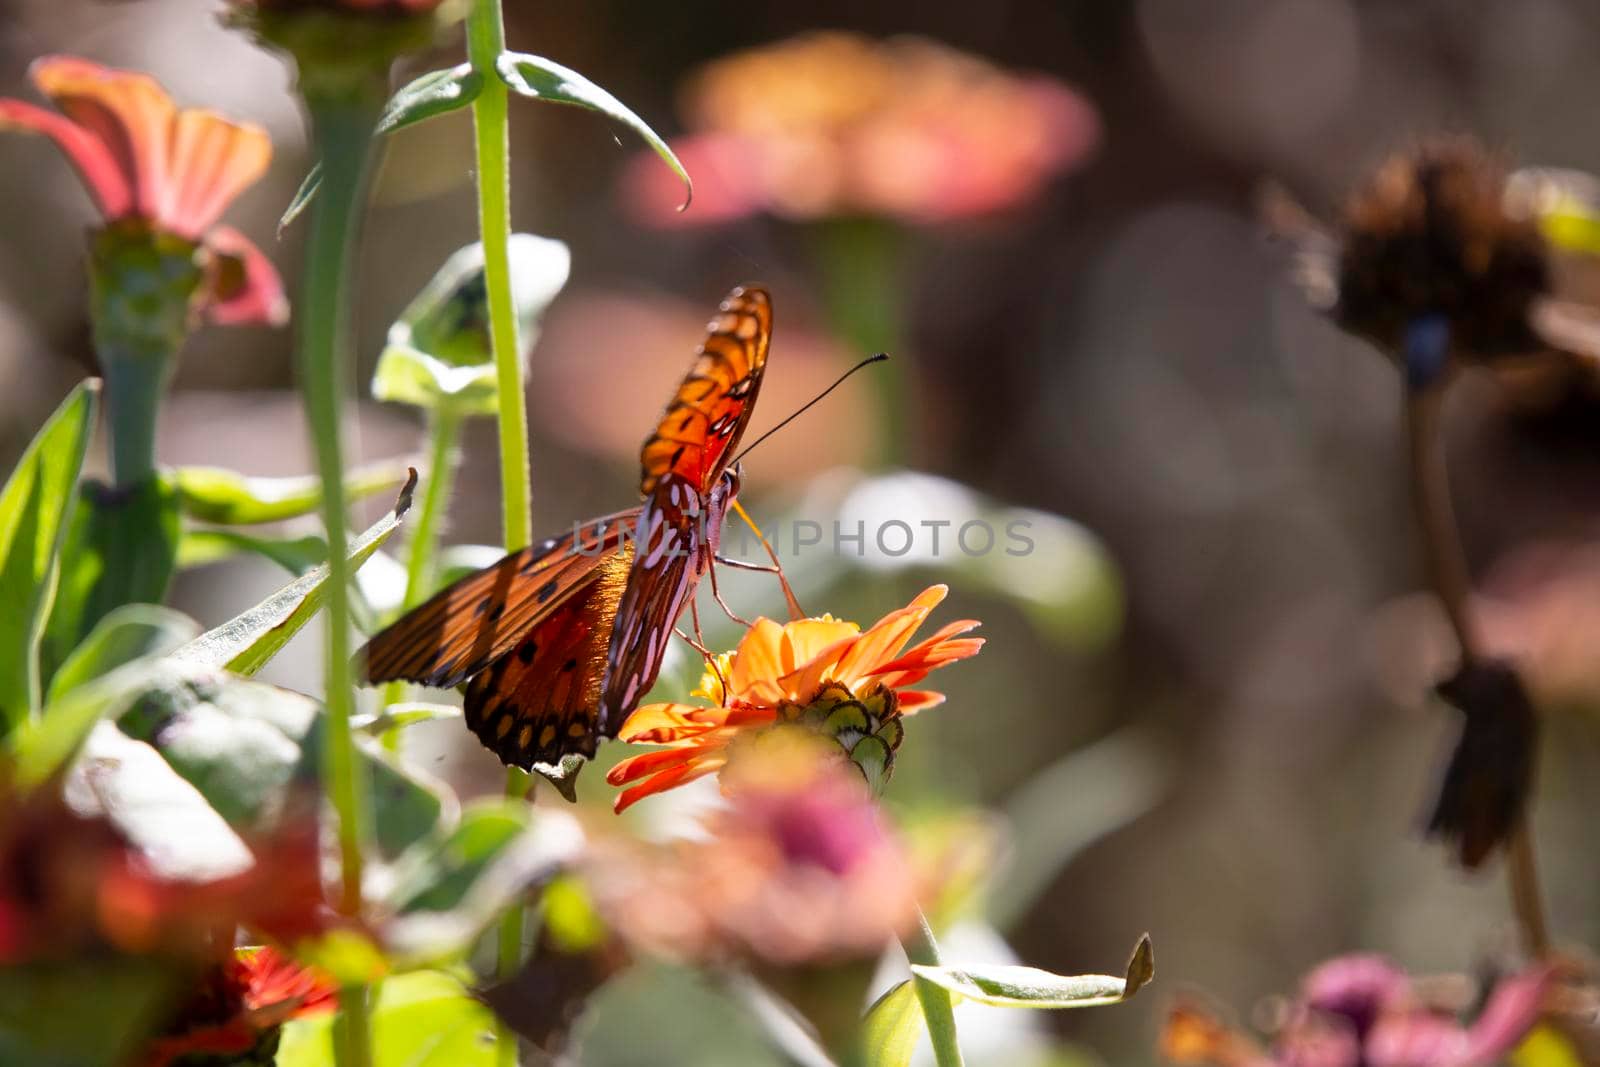 Gulf Fritillary Butterfly by tornado98